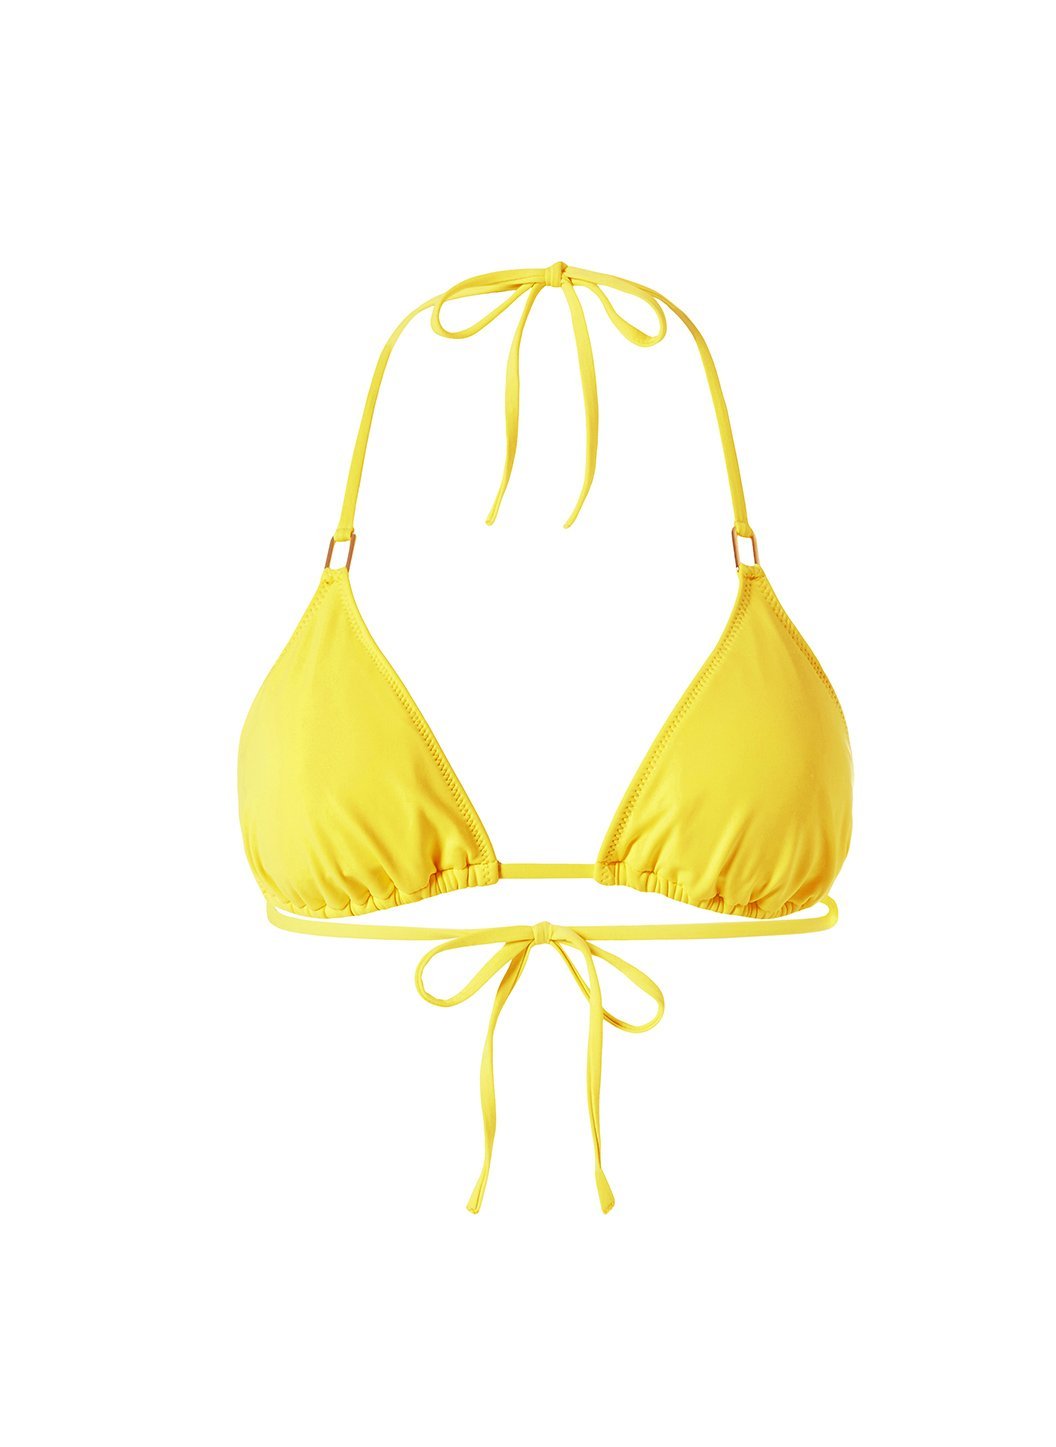 Cancun Lemon Bikini Top Cutout 